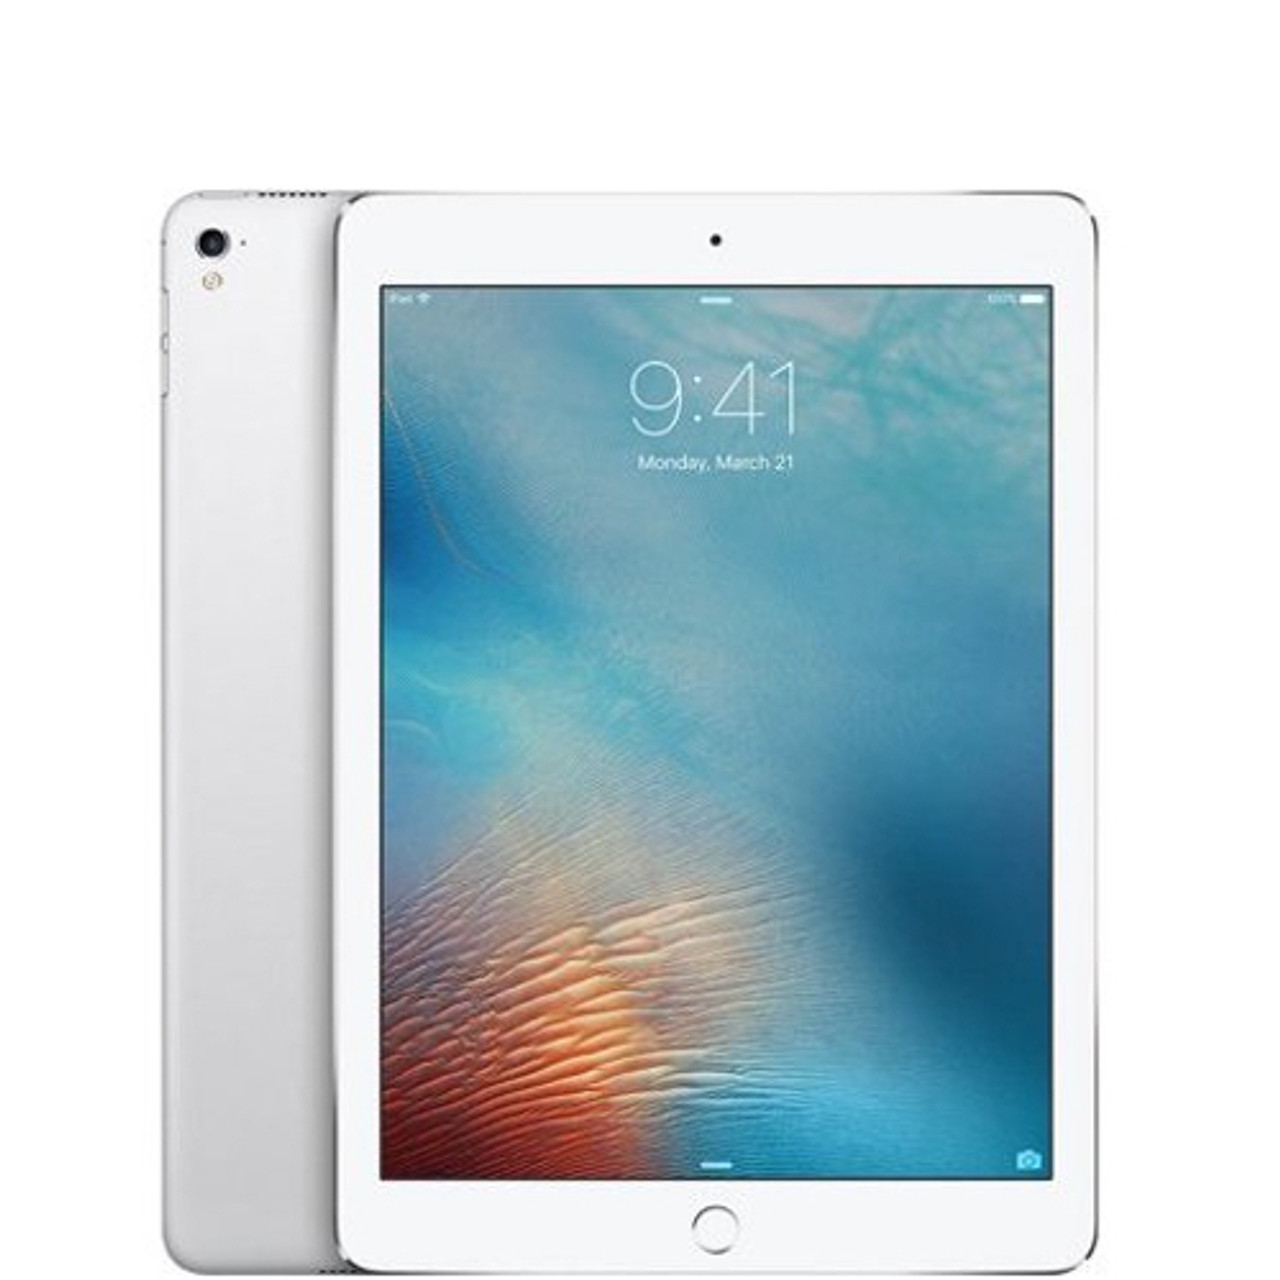 Touch ID*: Apple iPad Pro 9.7-inch Wi-Fi + Cellular (Unlocked) 128GB -  Silver MLT22LL/A